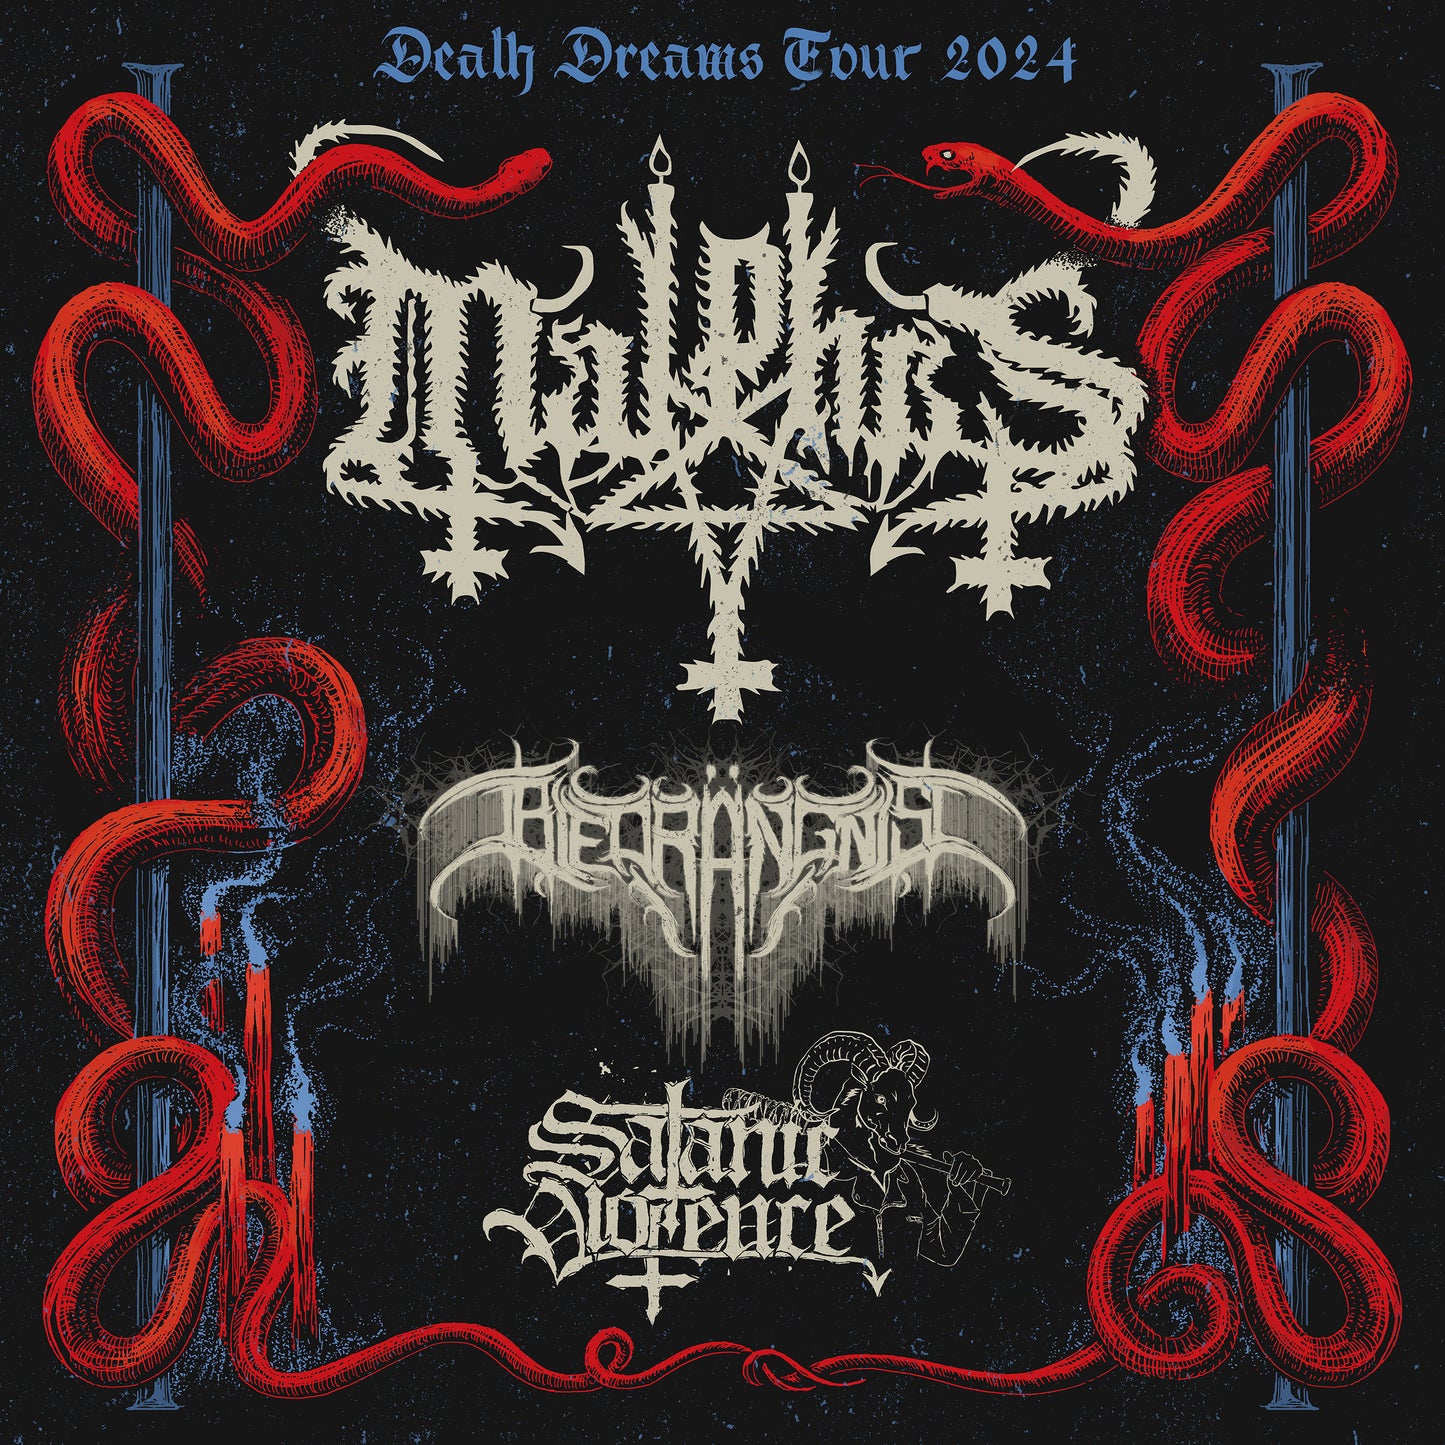 Death Dreams Tour 2024 - Malphas, Bedrängnis und Satanic Violence am 06-04-2024